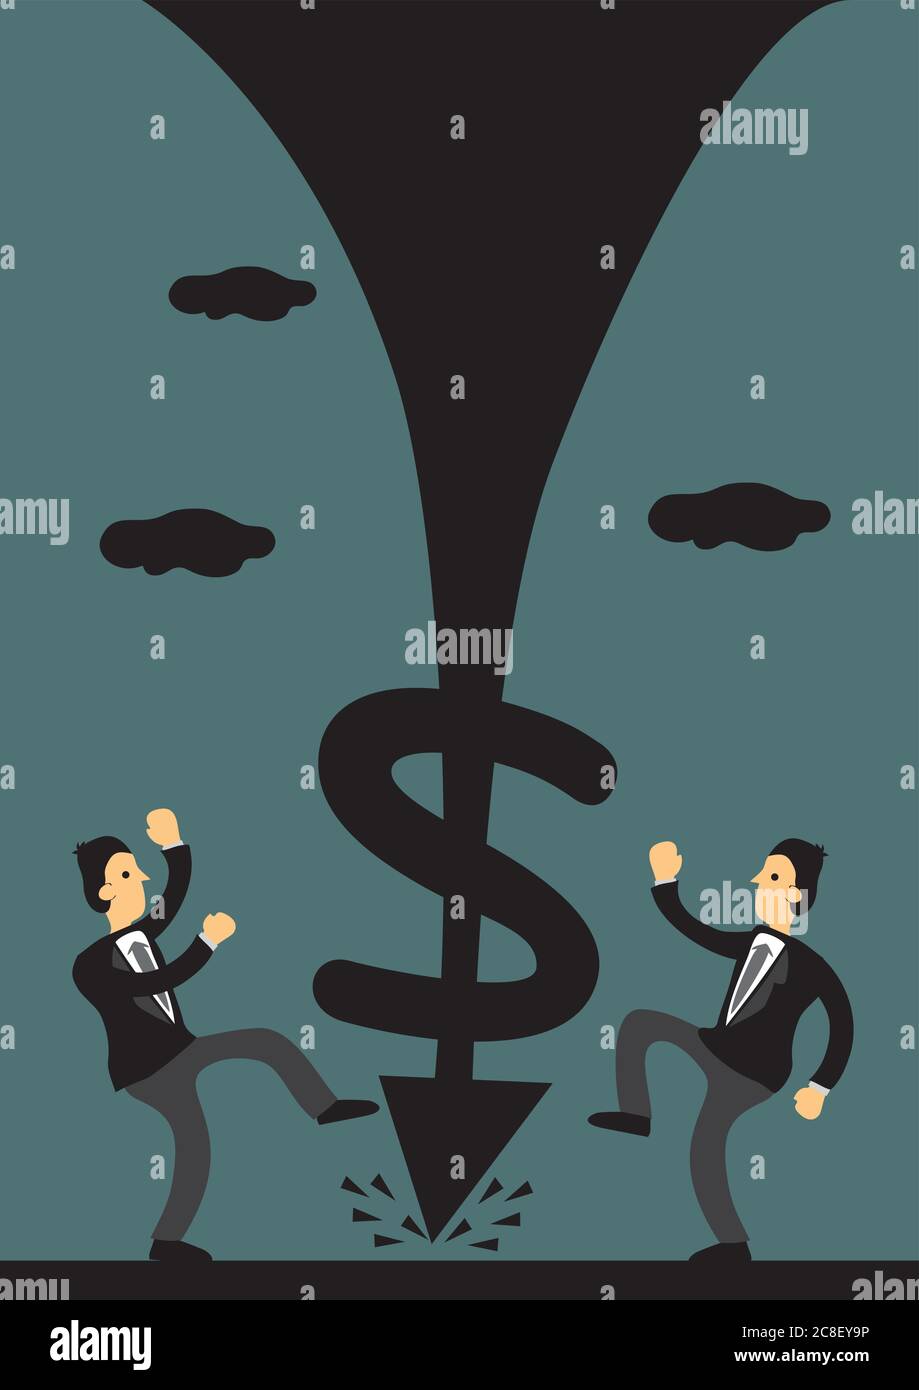 Big arrow sign with money symbol crashing down. Creative cartoon vector illustration on market crash and economic crisis concept. Stock Vector